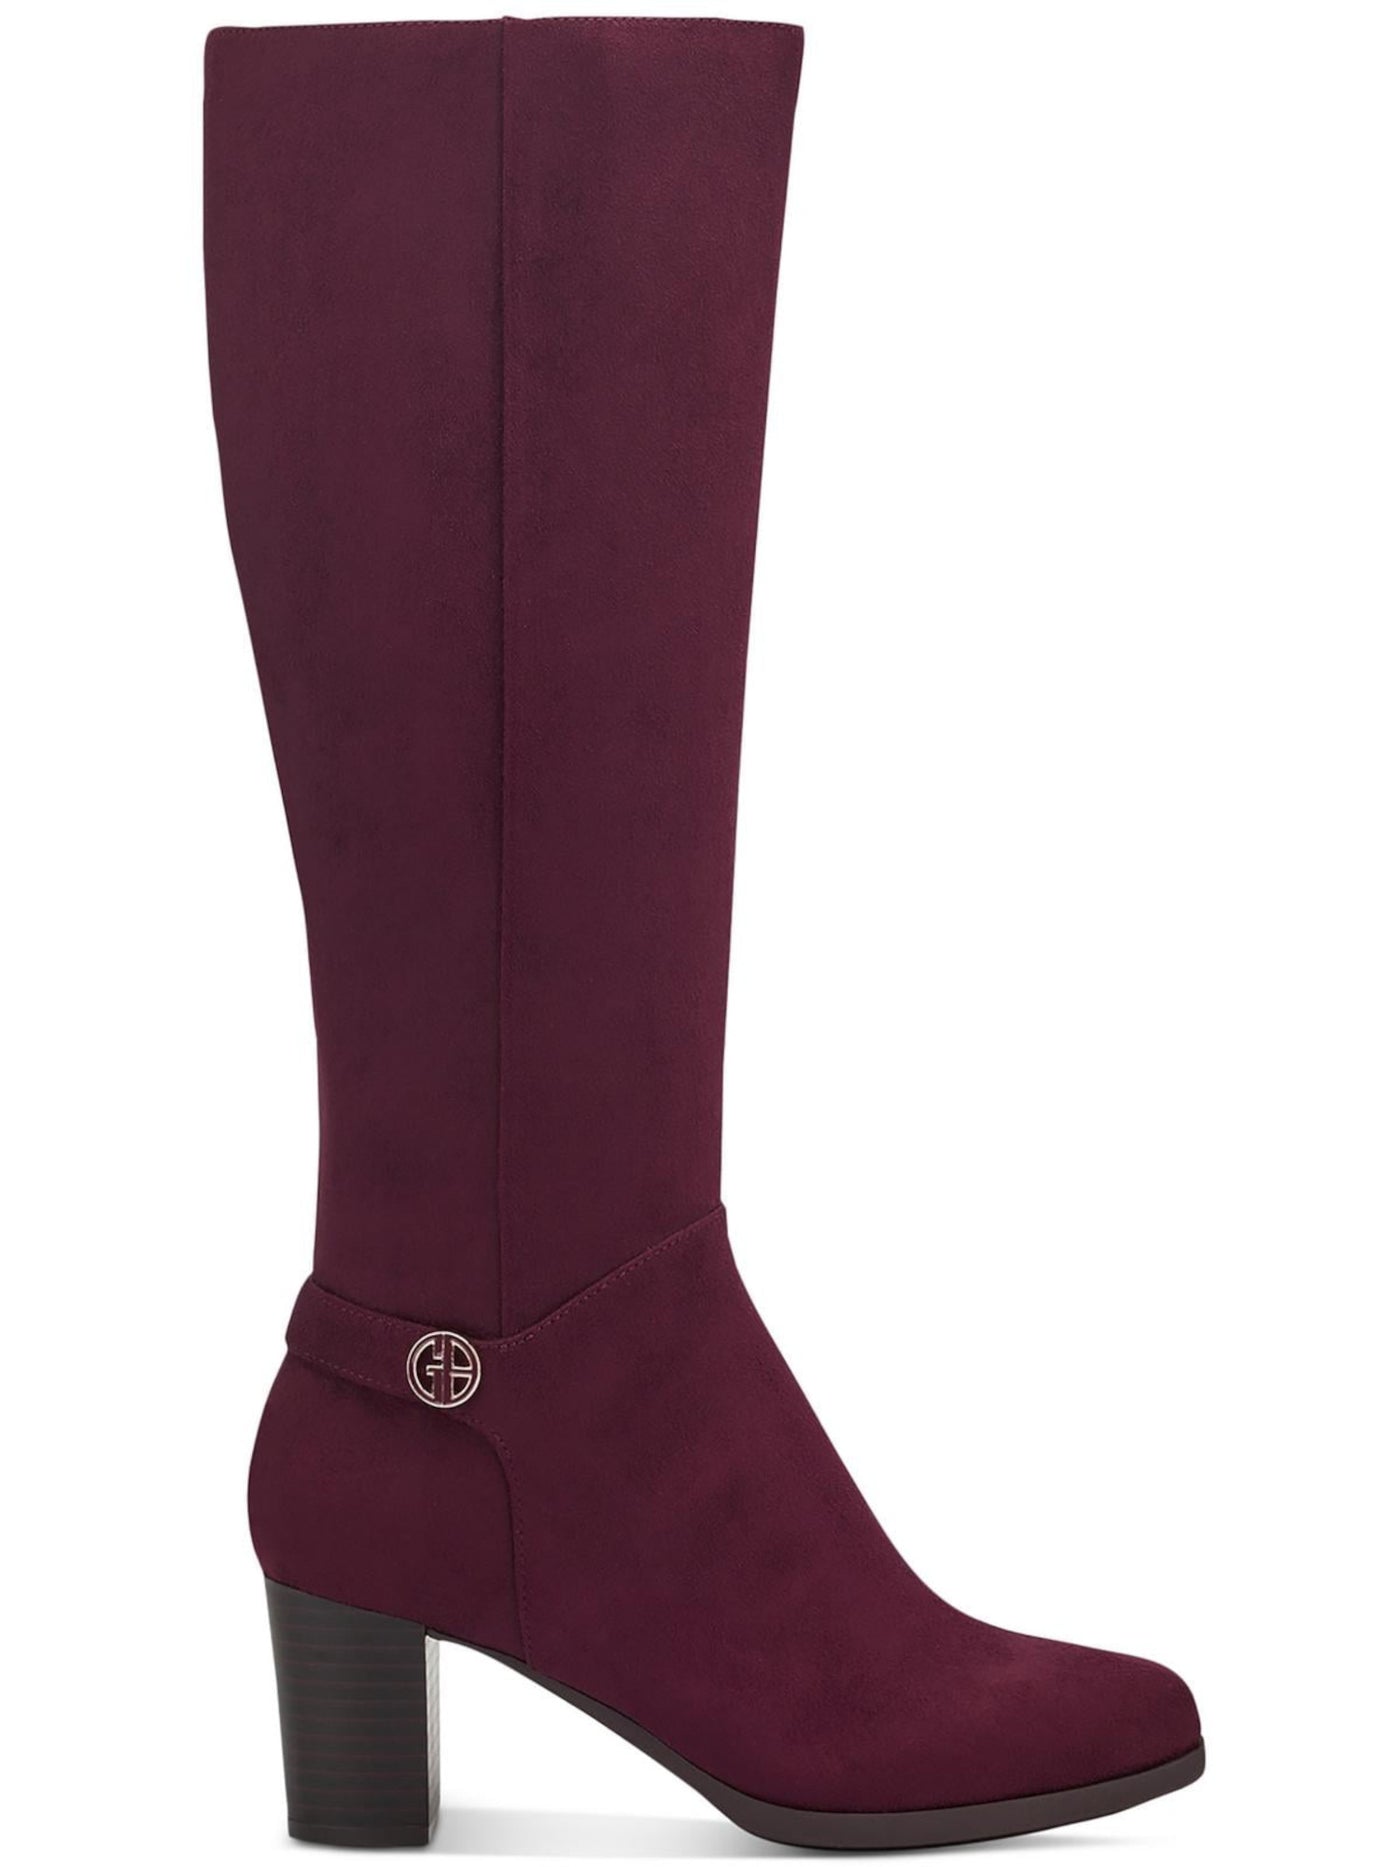 GIANI BERNINI Womens Burgundy Slip Resistant Goring Adonnys Round Toe Block Heel Zip-Up Heeled Boots 9.5 M